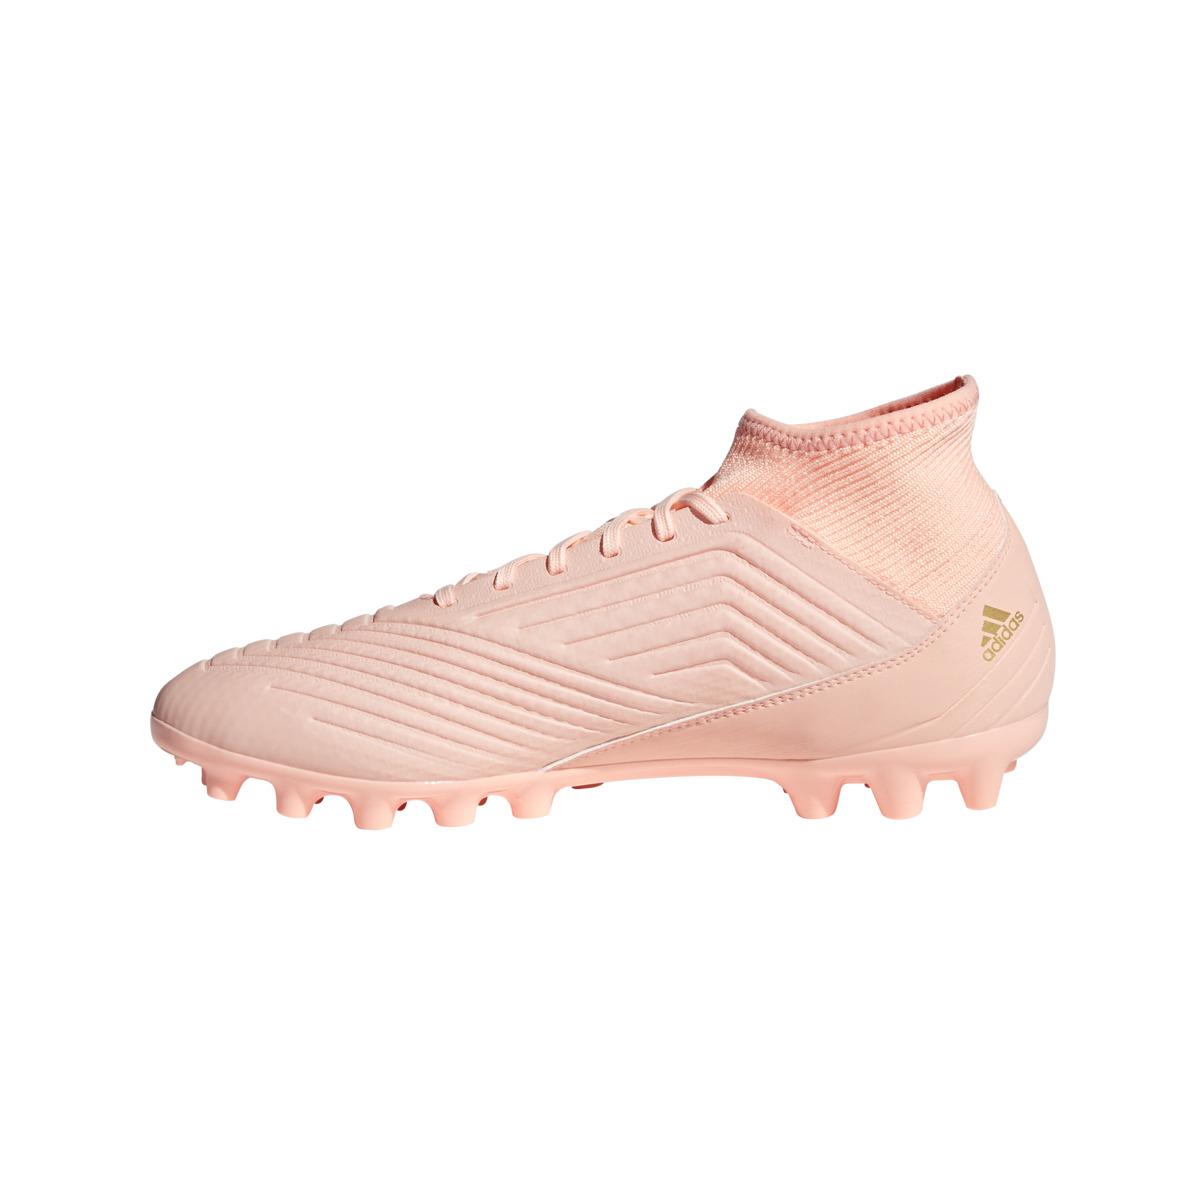 salmon pink football boots